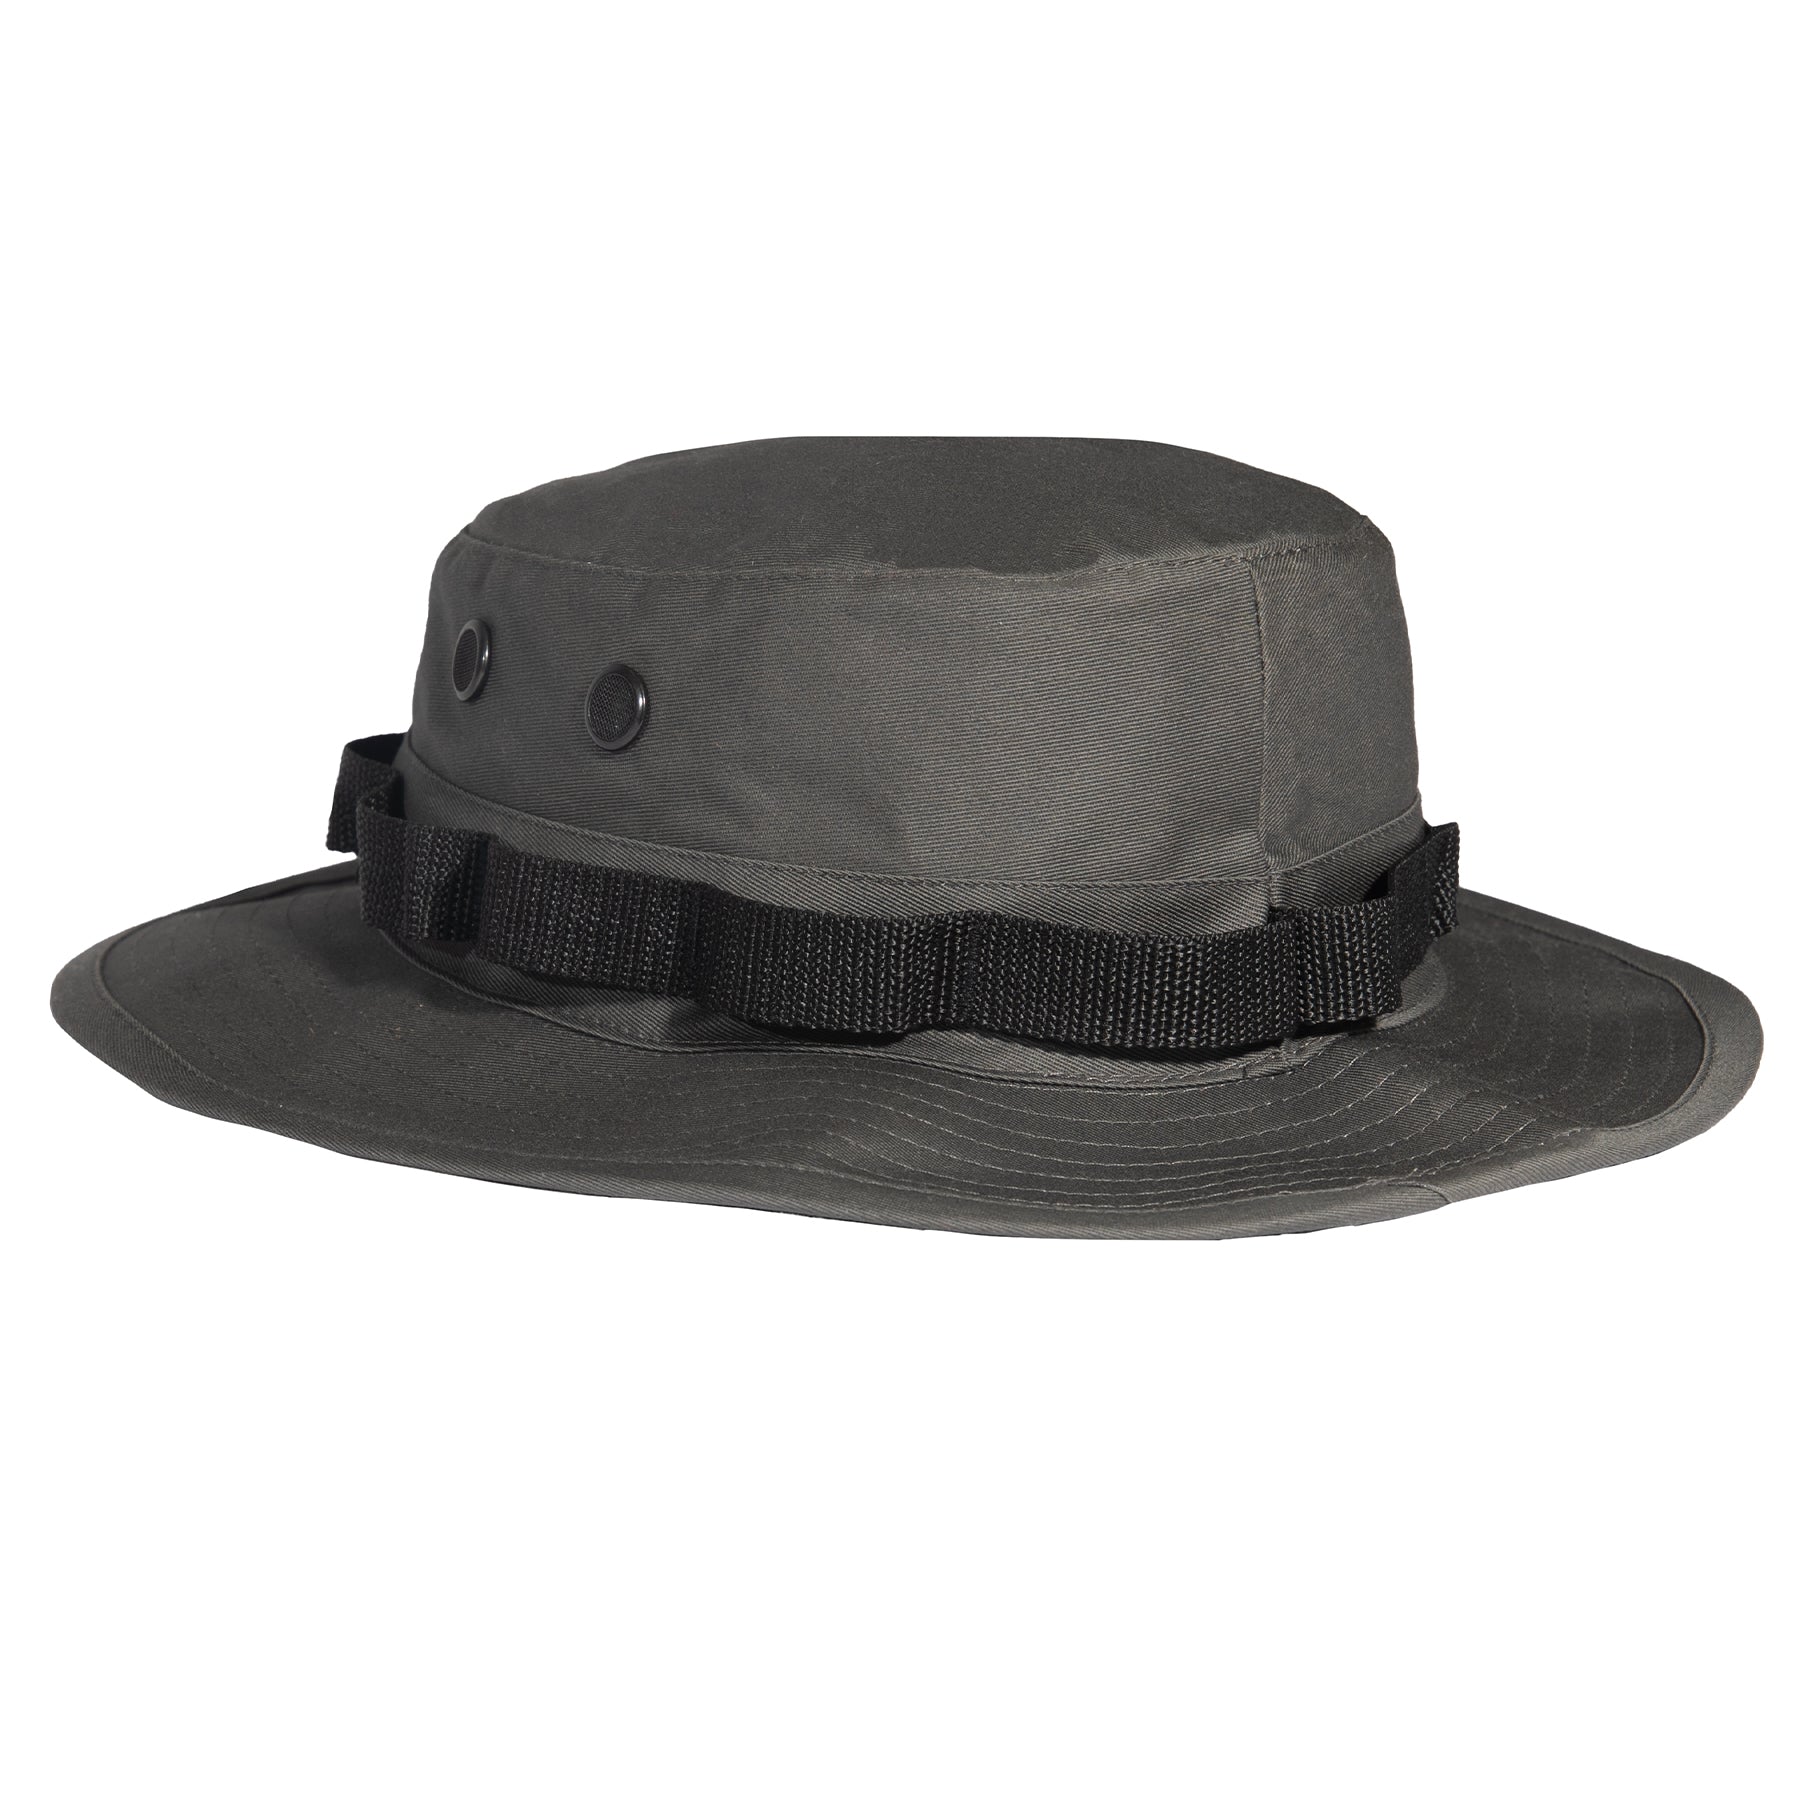 Rothco Black Boonie Hat